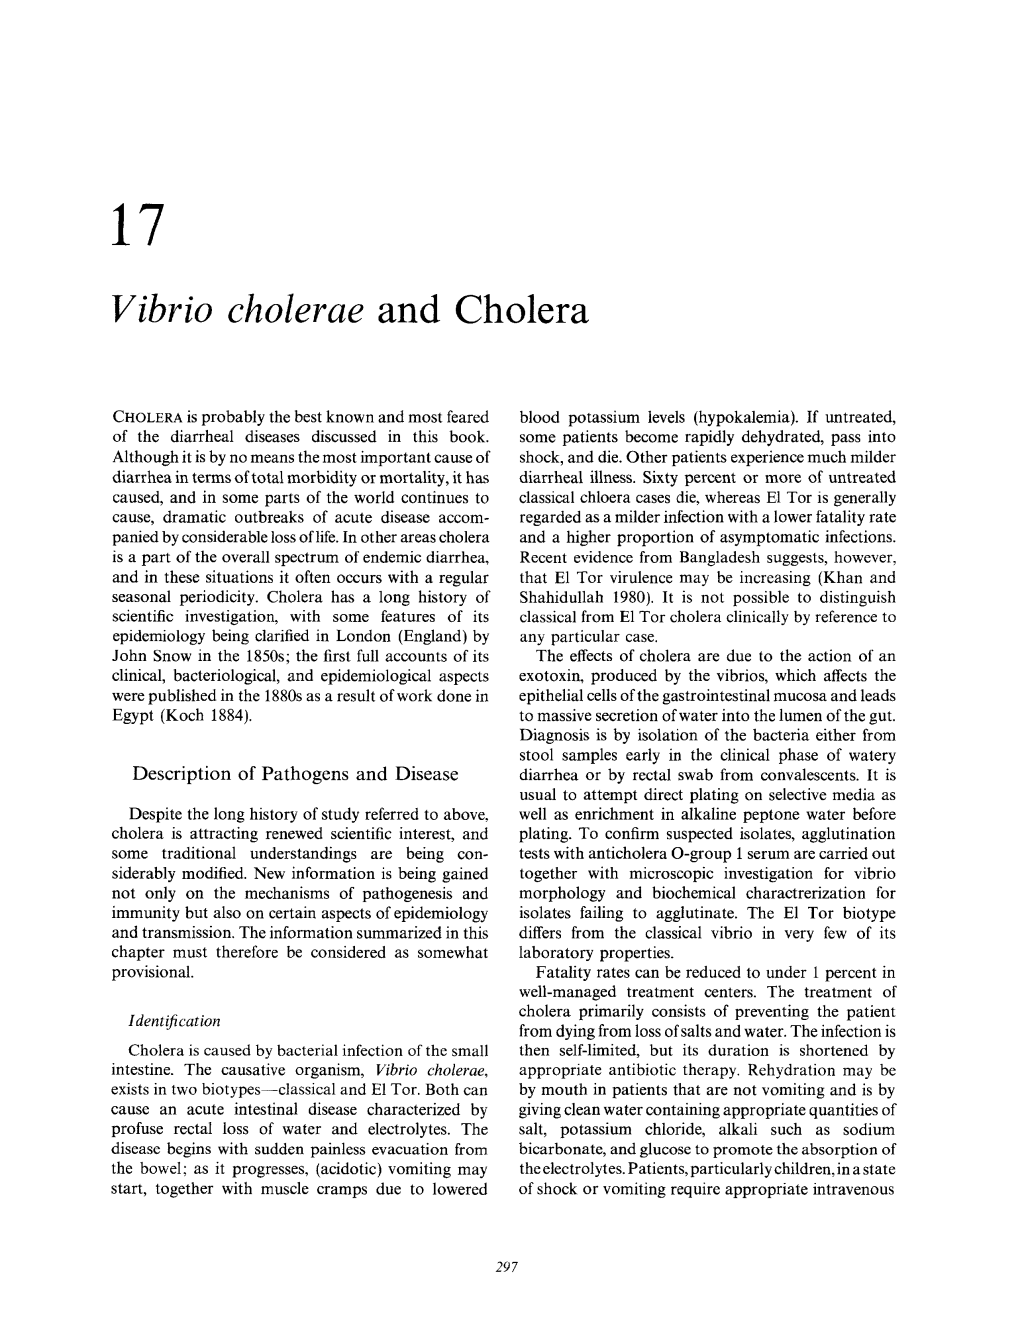 Vibrio Cholerae and Cholera